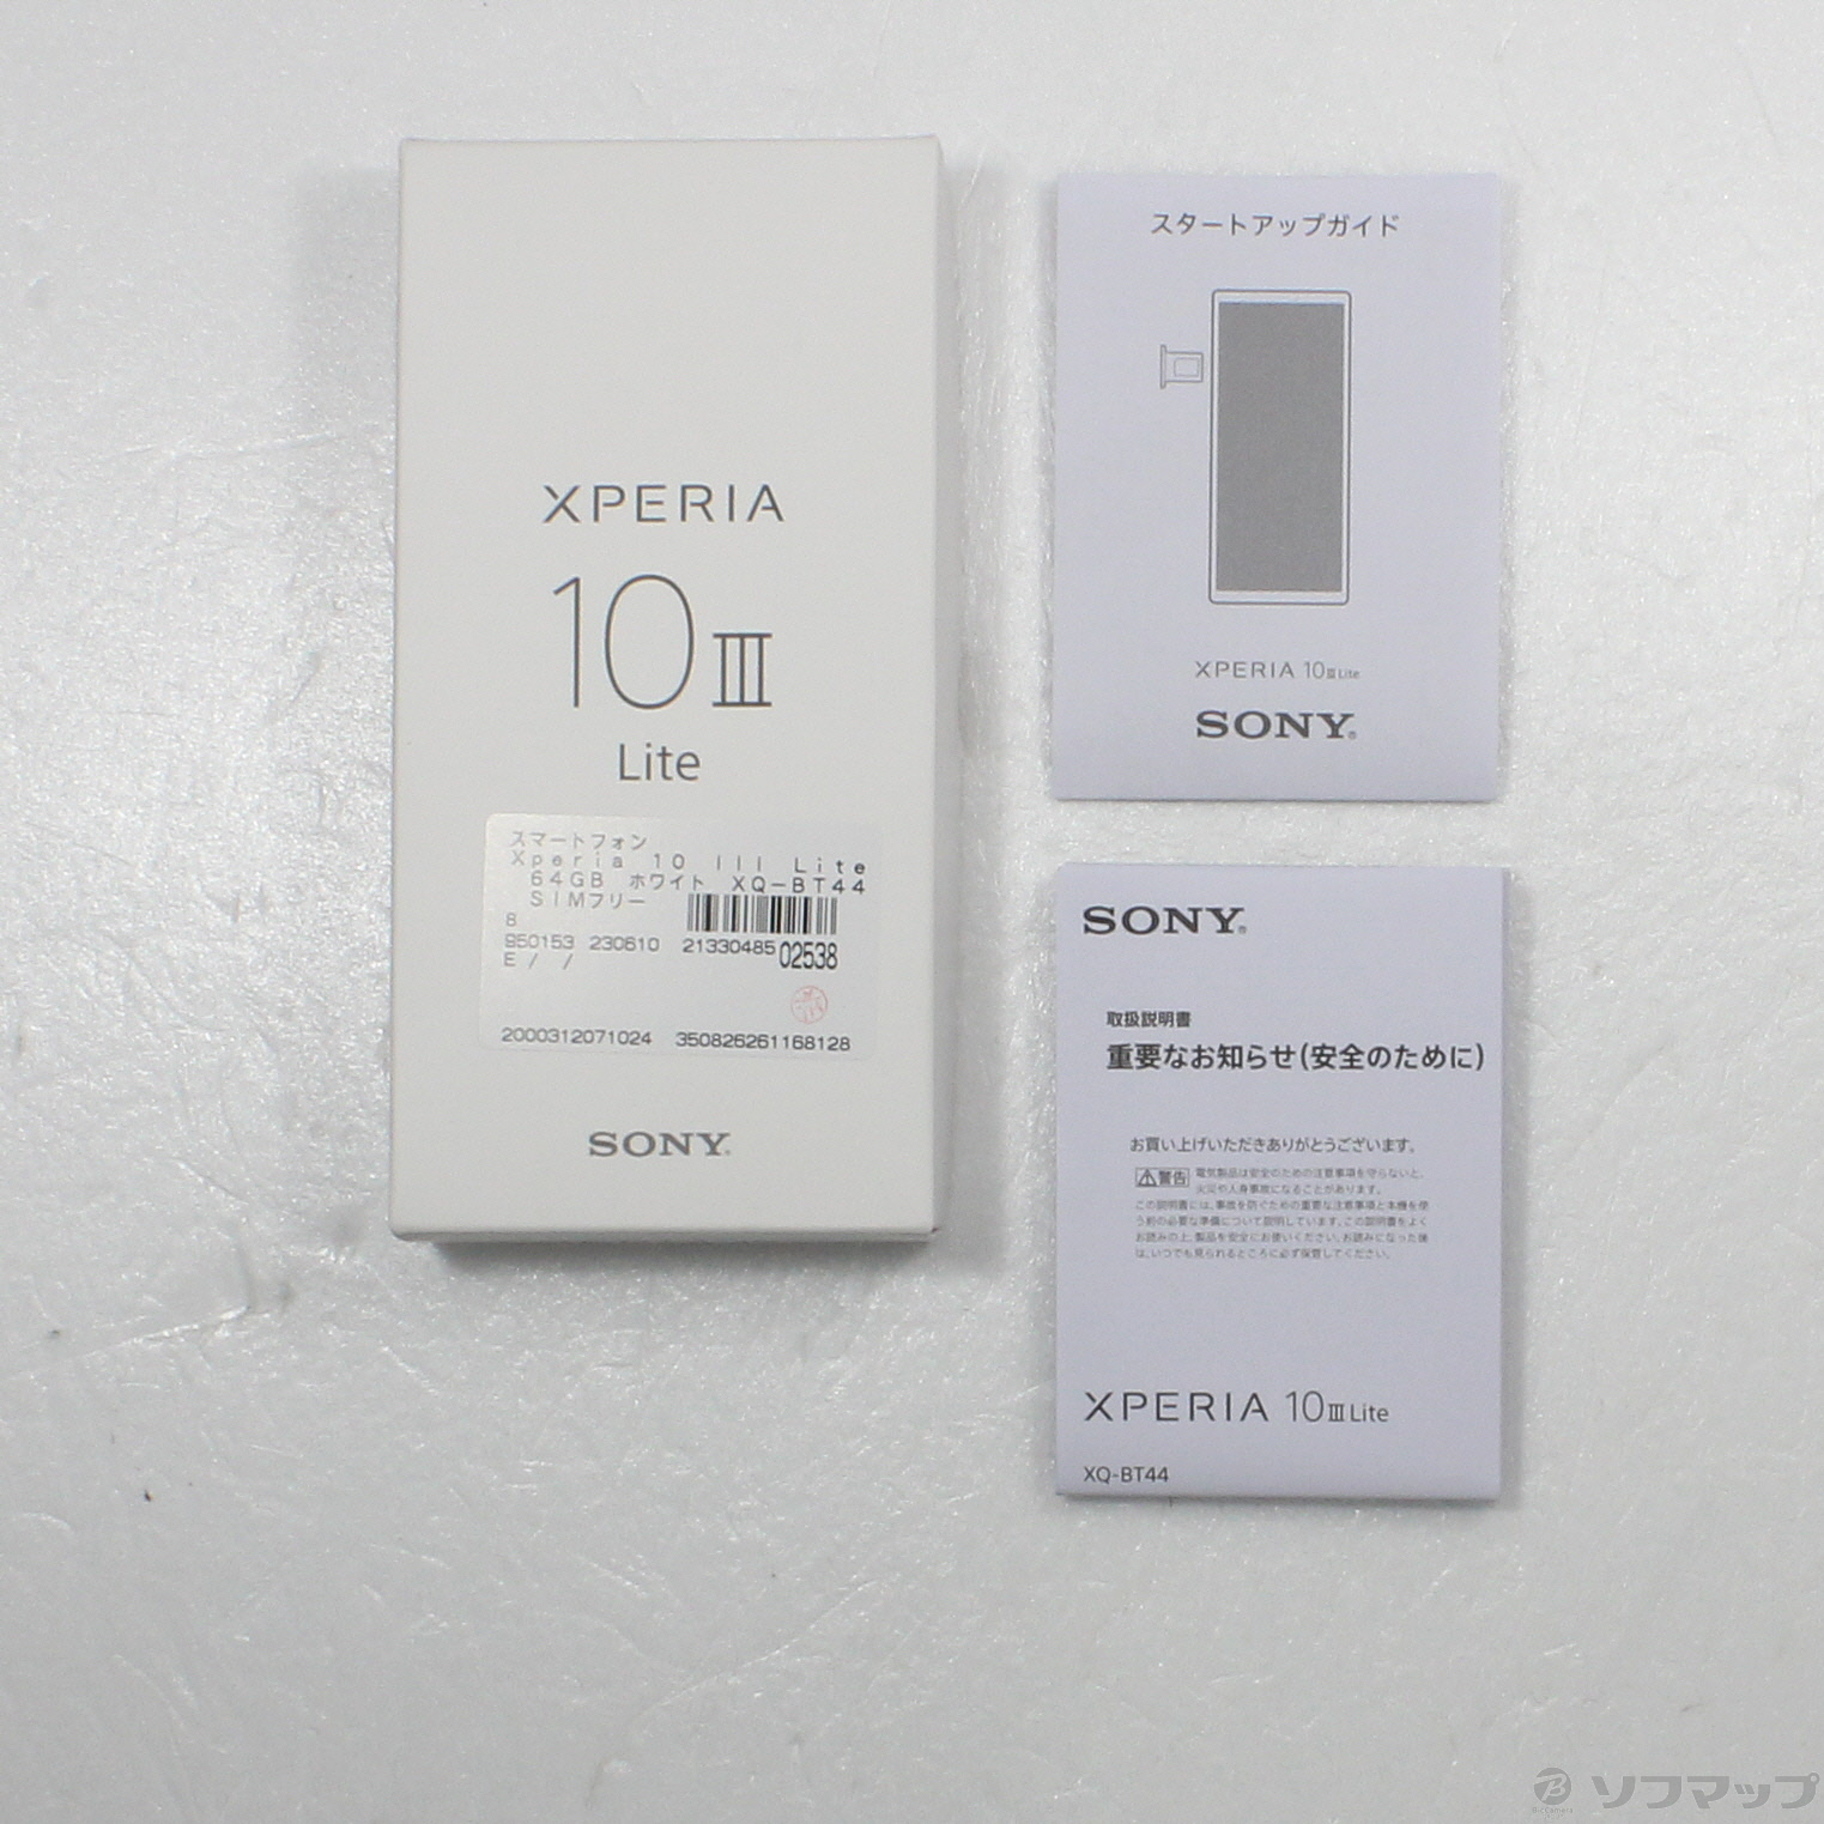 Xperia 10 III Lite ホワイト 64 GB SIMフリー-